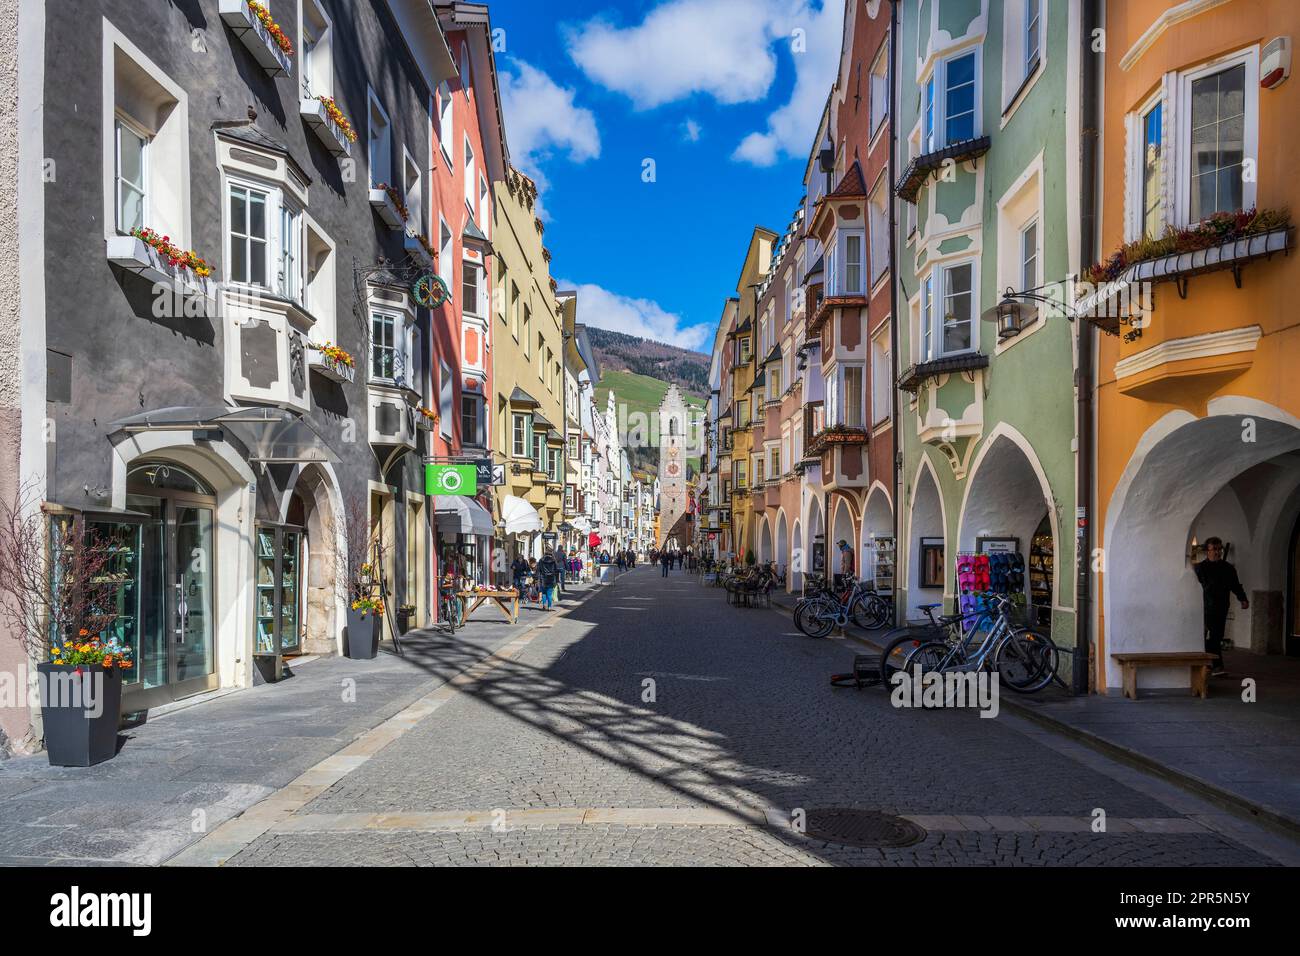 Main street with Zwolferturm medieval tower in the background, Sterzing-Vipiteno, Trentino-Alto Adige/Sudtirol, Italy Stock Photo